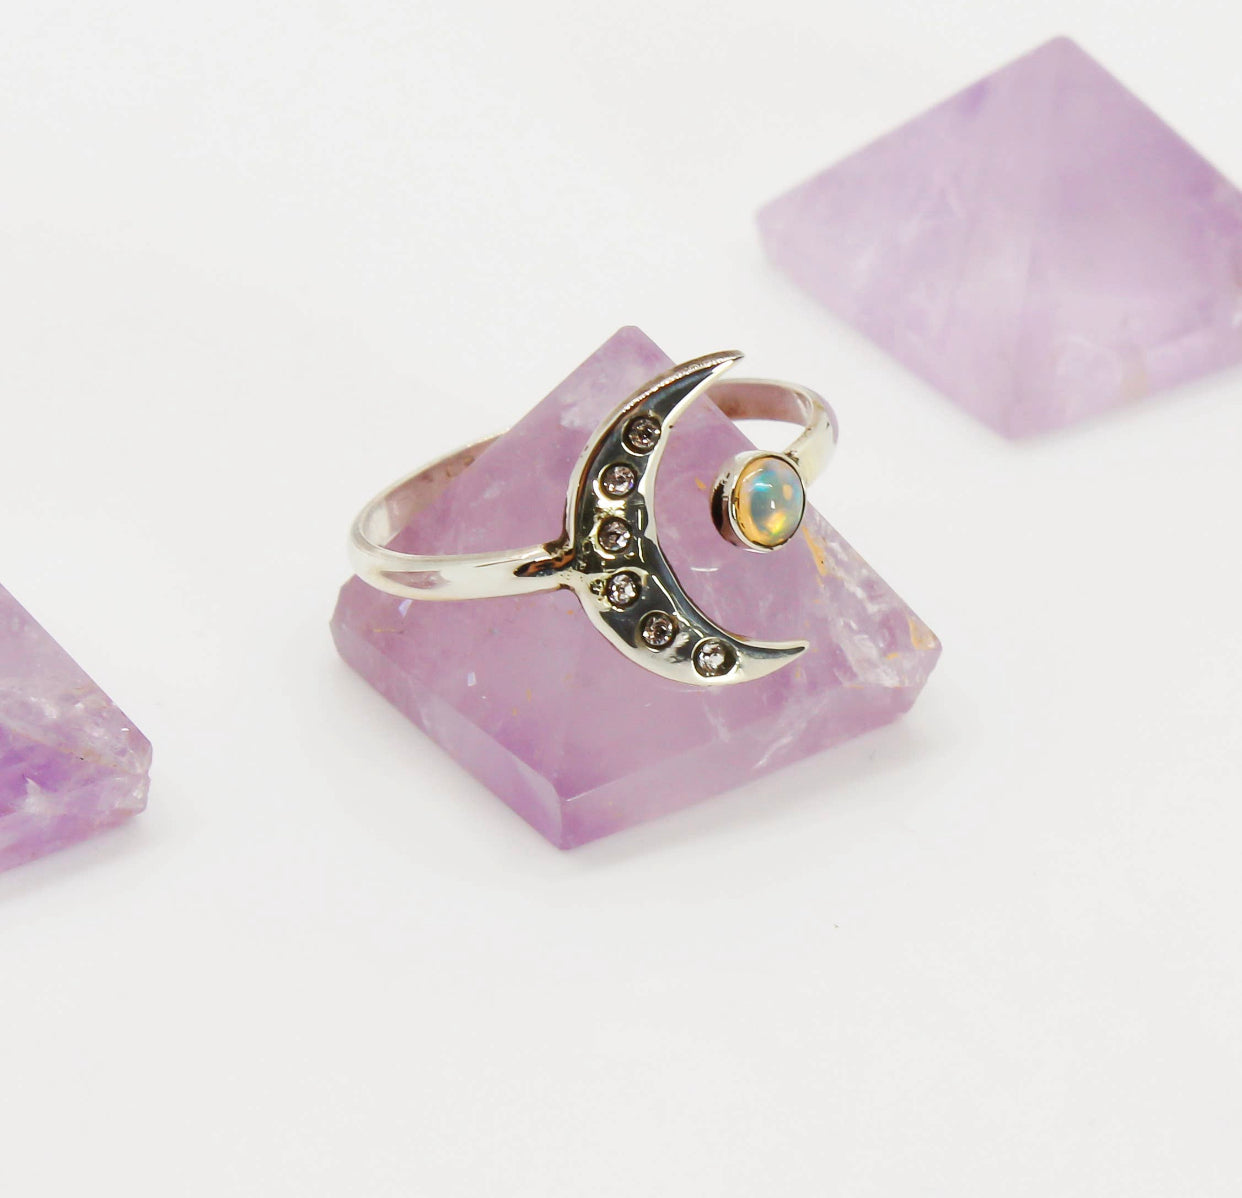 Moon Ring -Ethiopian Opal + crystal Rhinestone 925 Size 5 - Moon Room Shop and Wellness